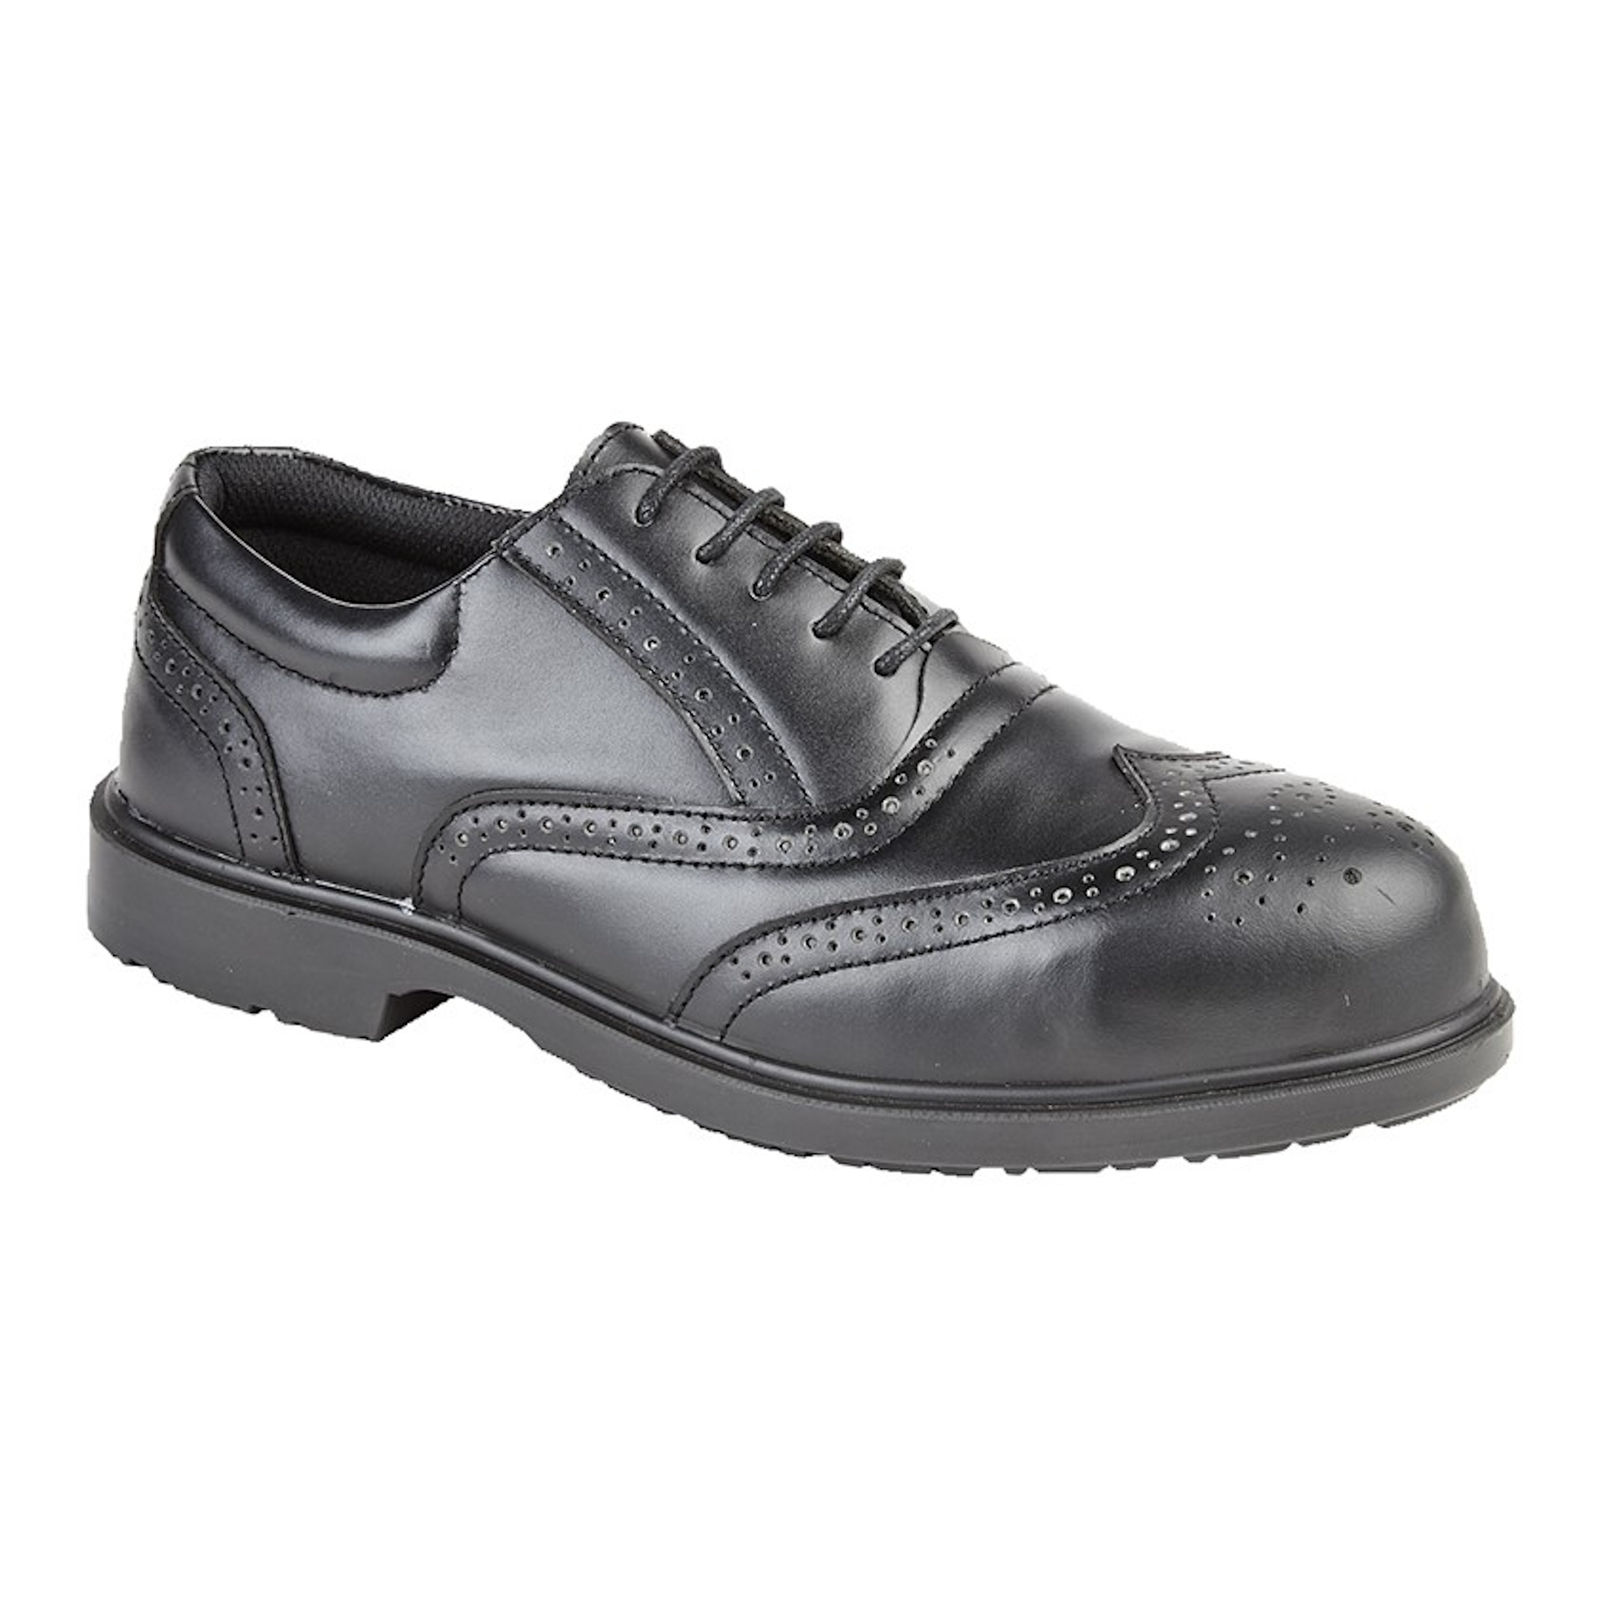 Grafters Uniform Composite Toe Cap Oxford Brogue Safety Shoes